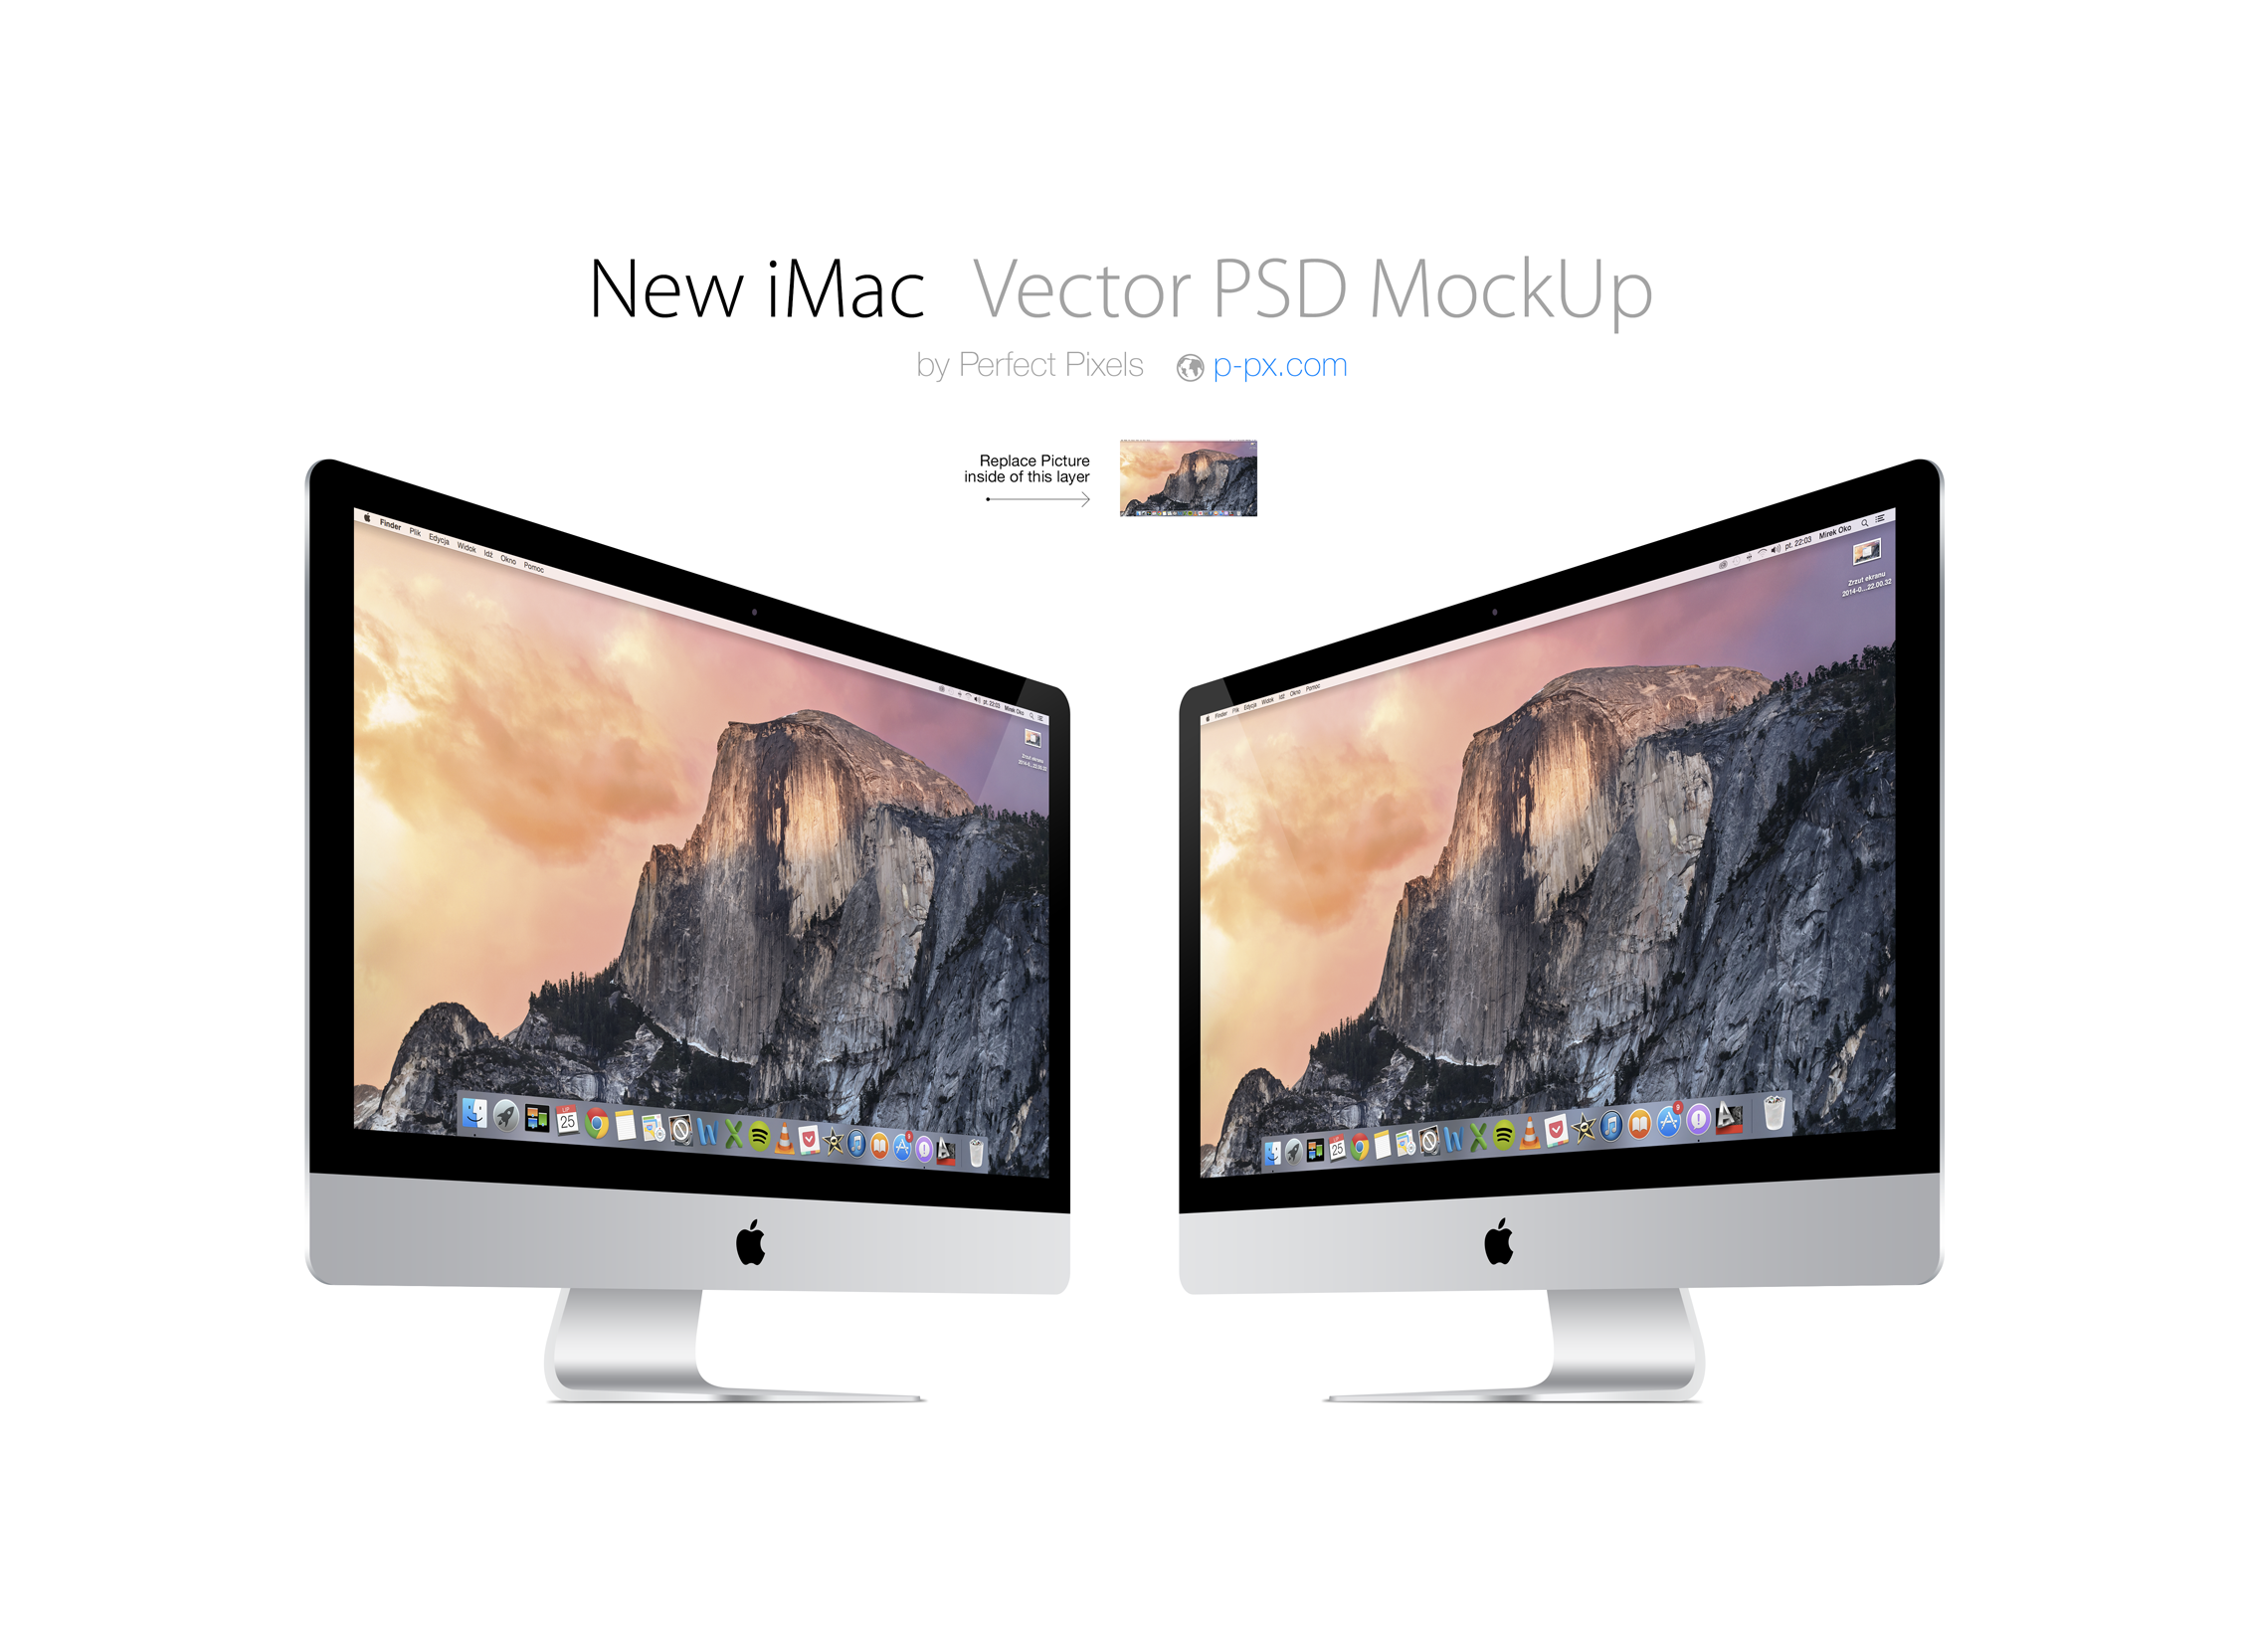 New iMac Mockup Template Free PSD - Download PSD